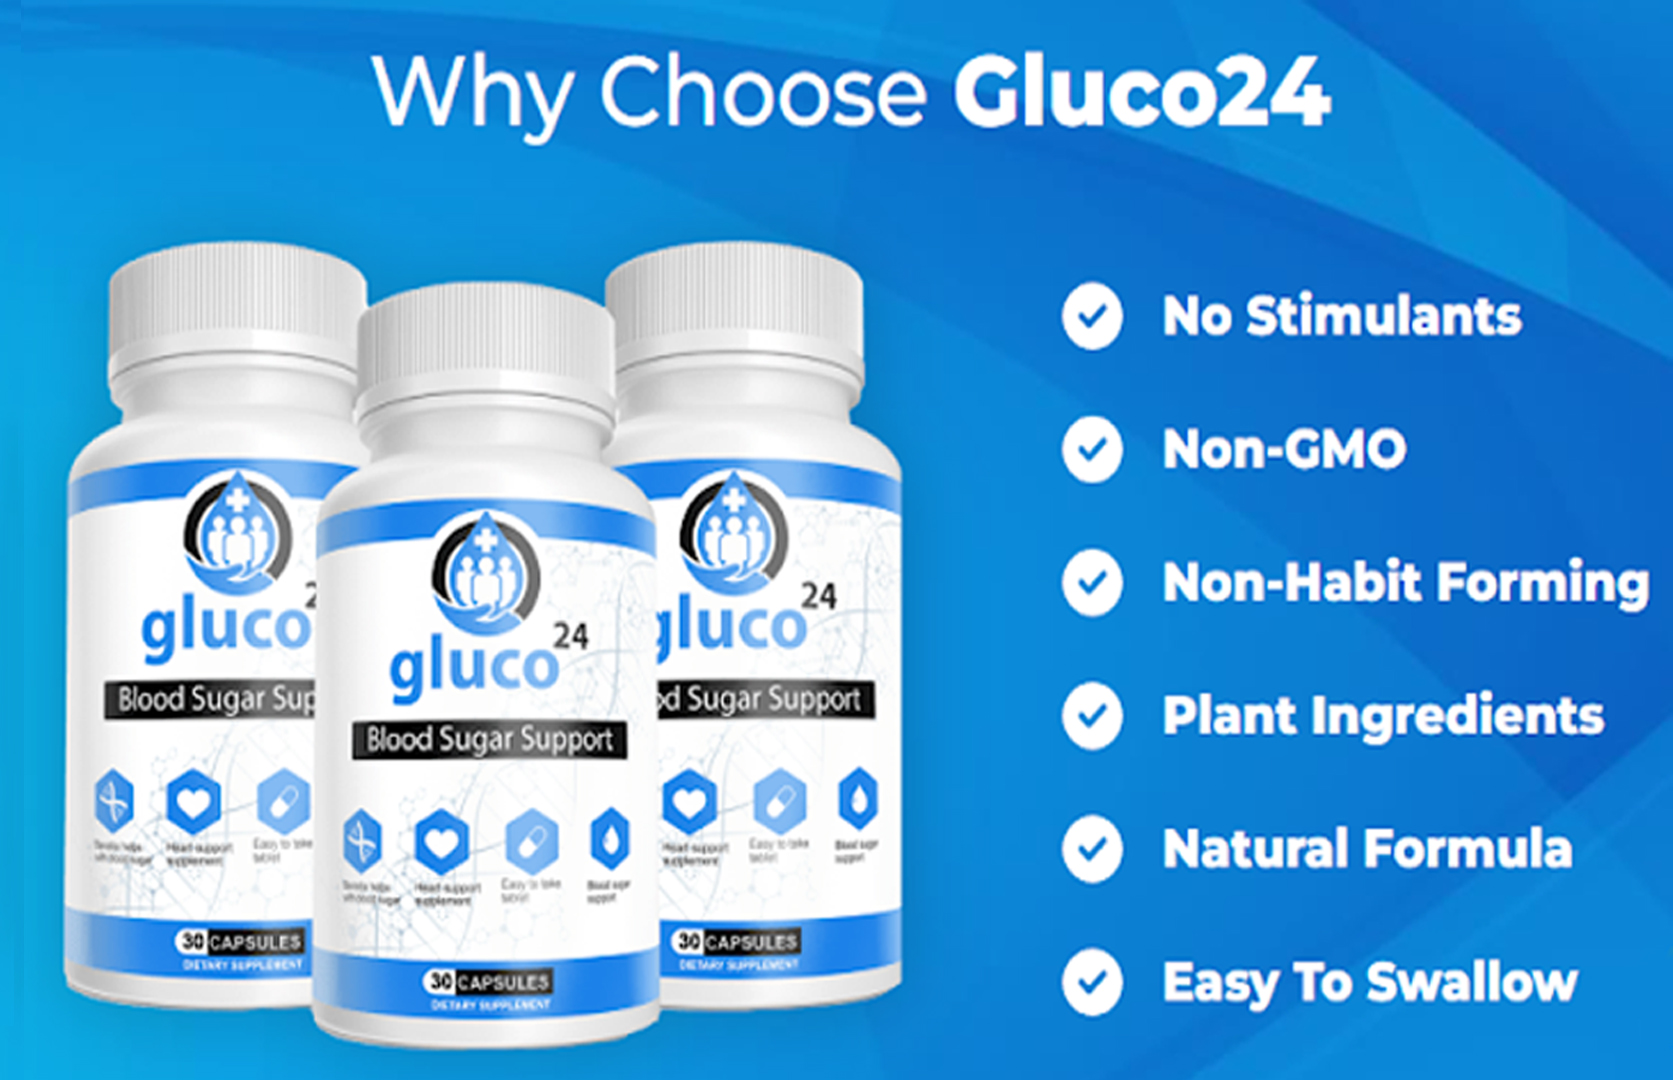 Gluco24 Blood Sugar Support